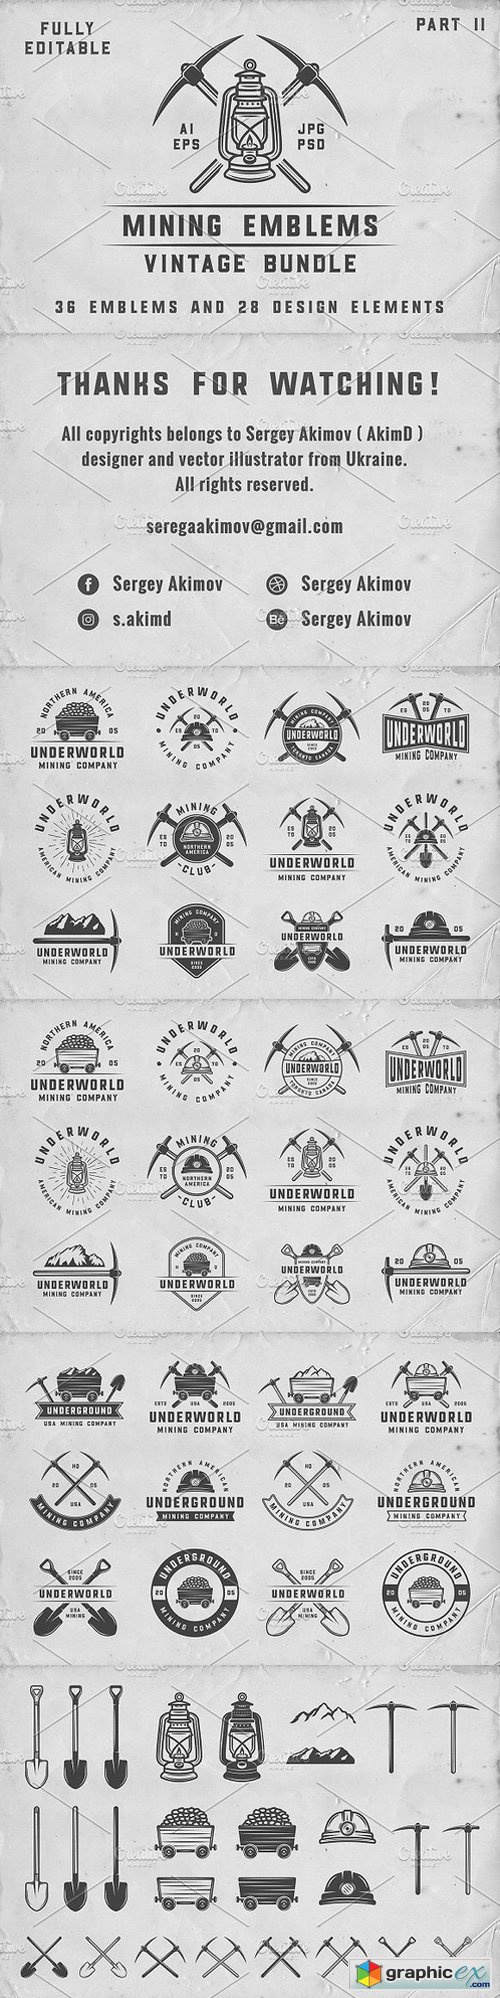 36 Vintage Mining Emblems part 2